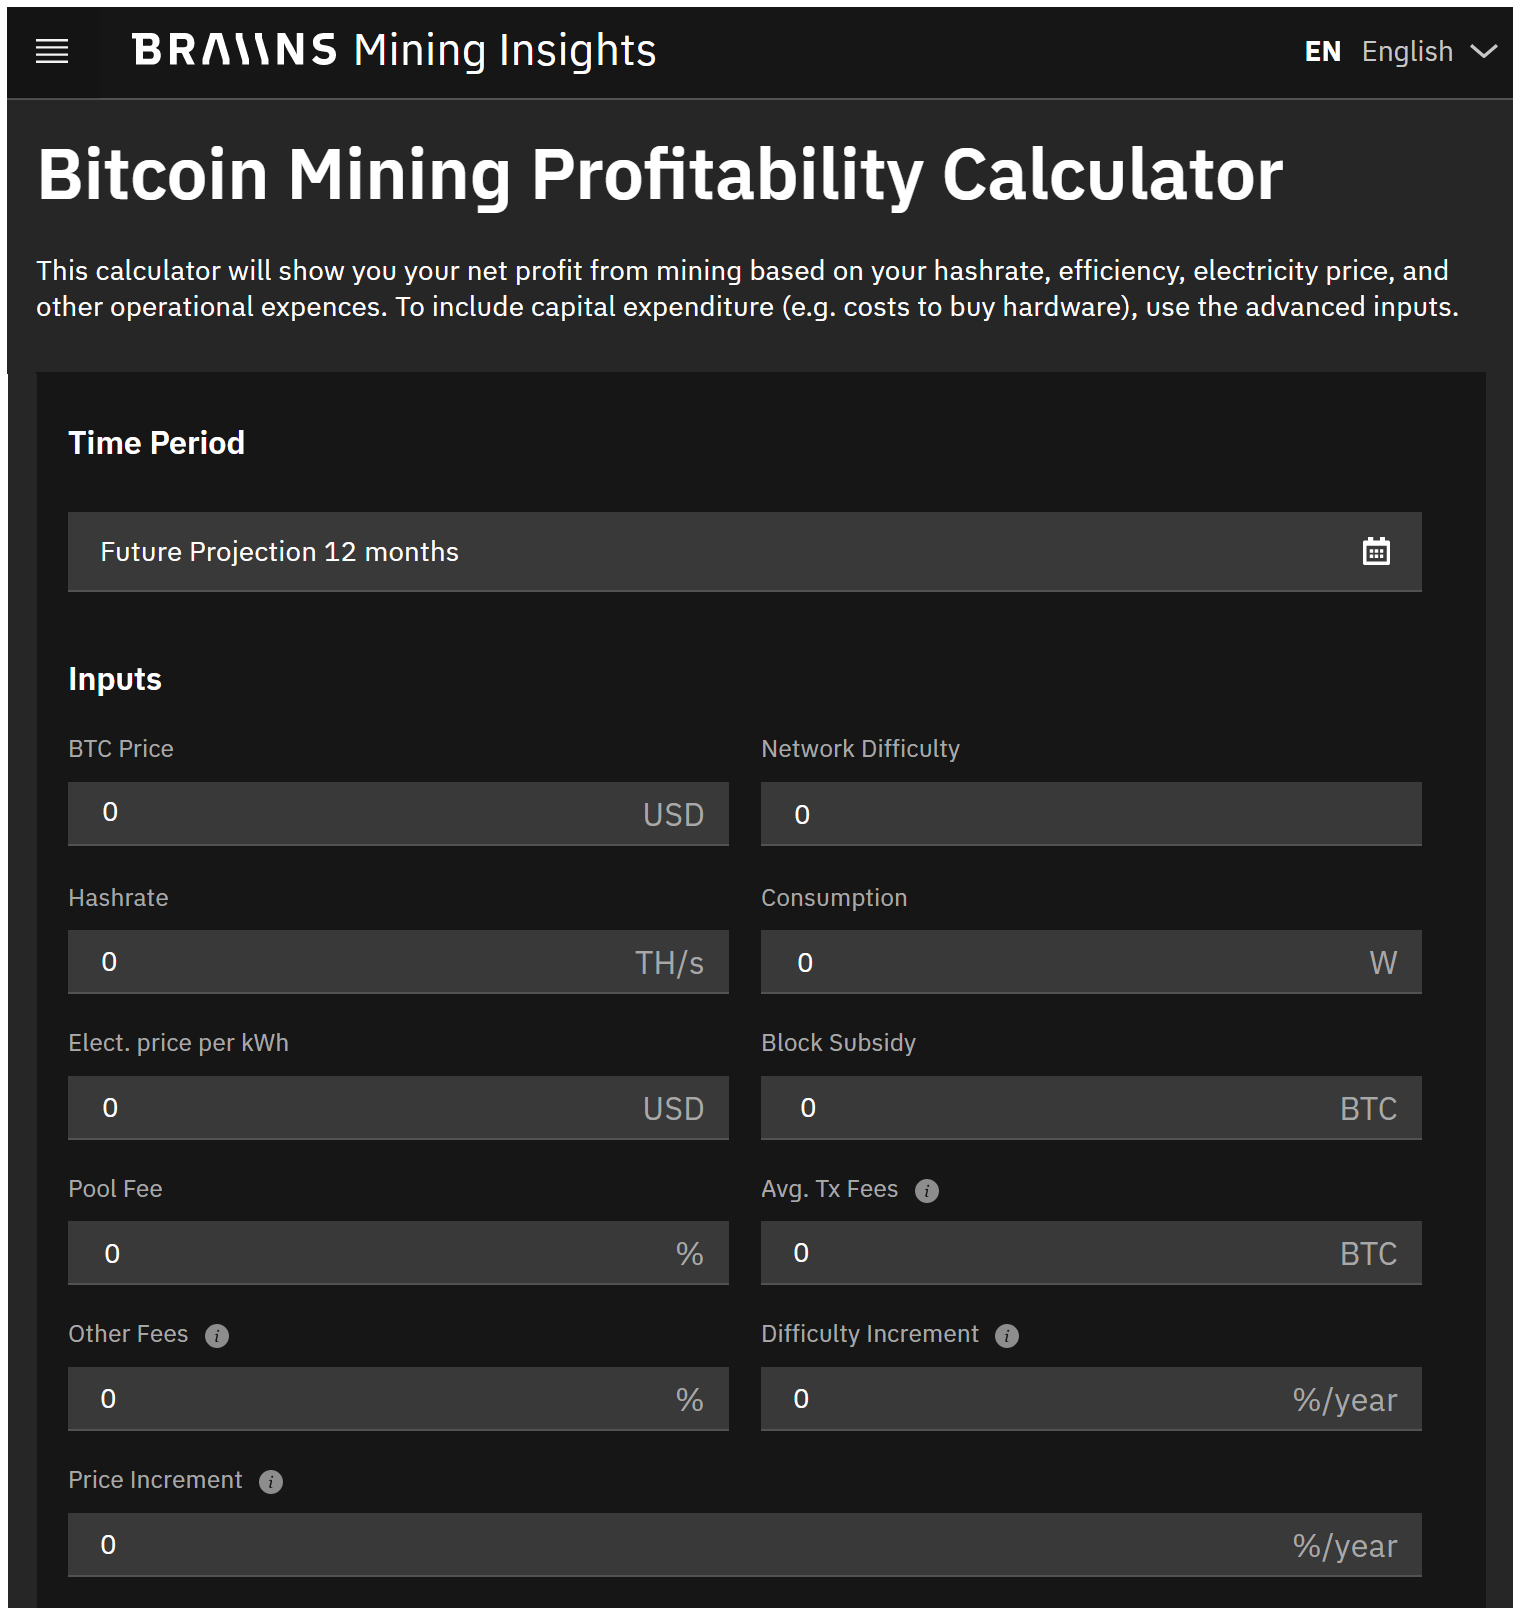 Bitcoin (BTC) mining profitability calculator